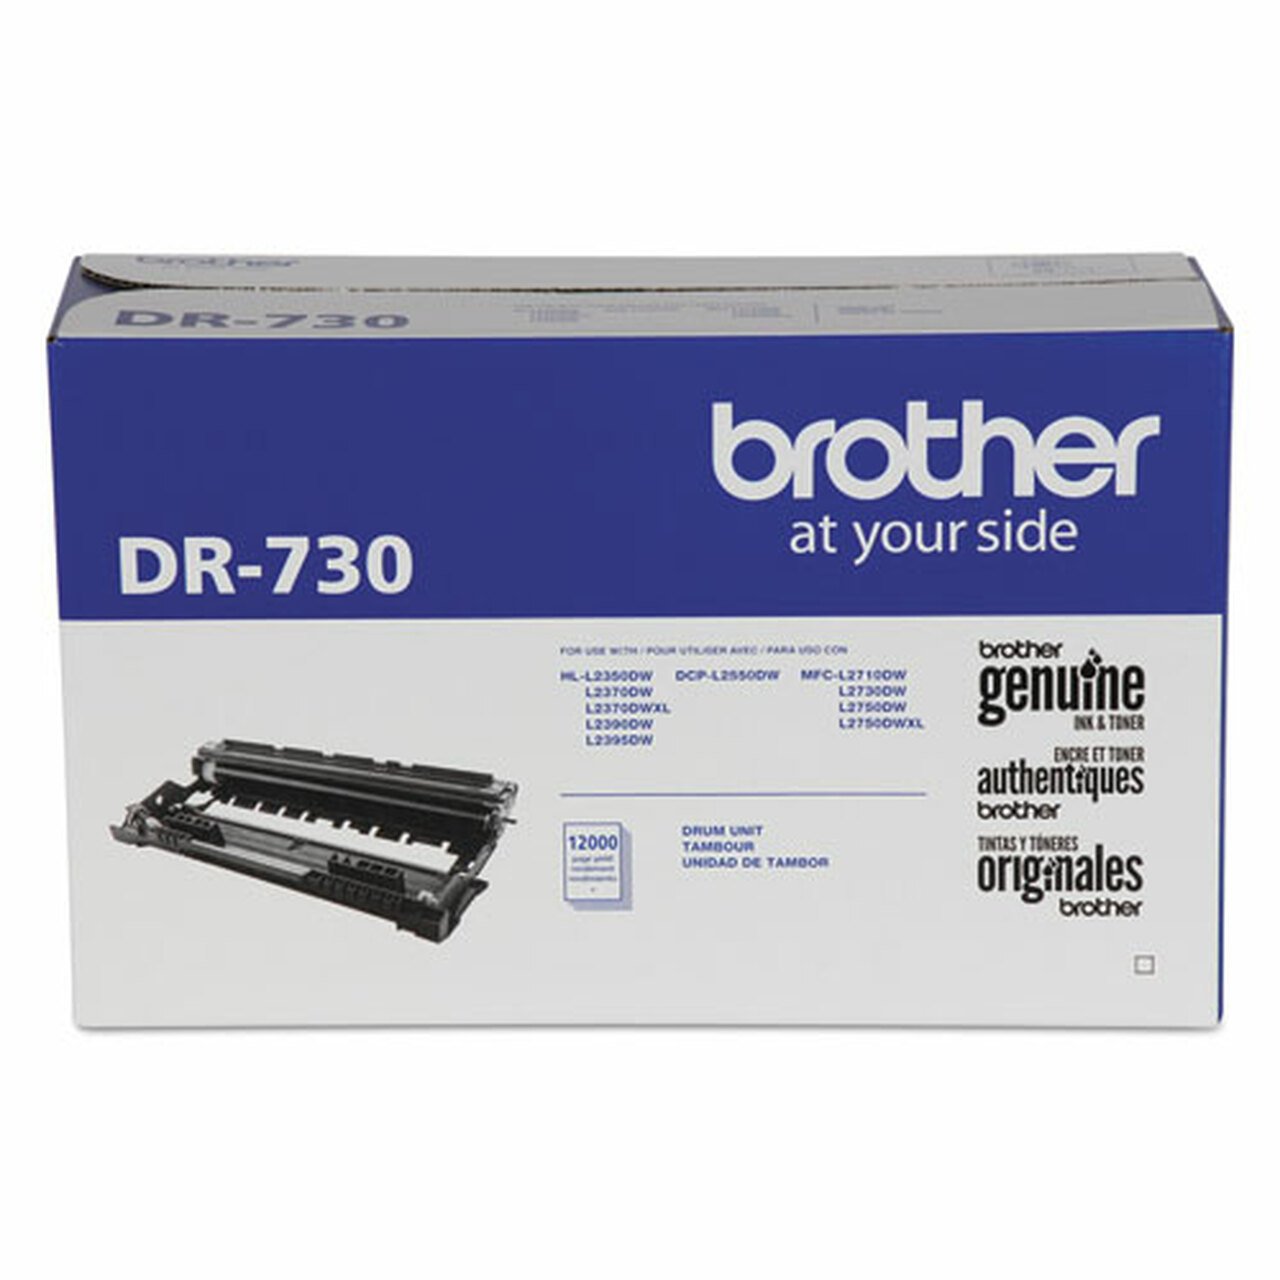 Absolute Toner Original Brother Genuine OEM Drum Unit DR730 Black 12000 Pages Yield Original Brother Cartridges